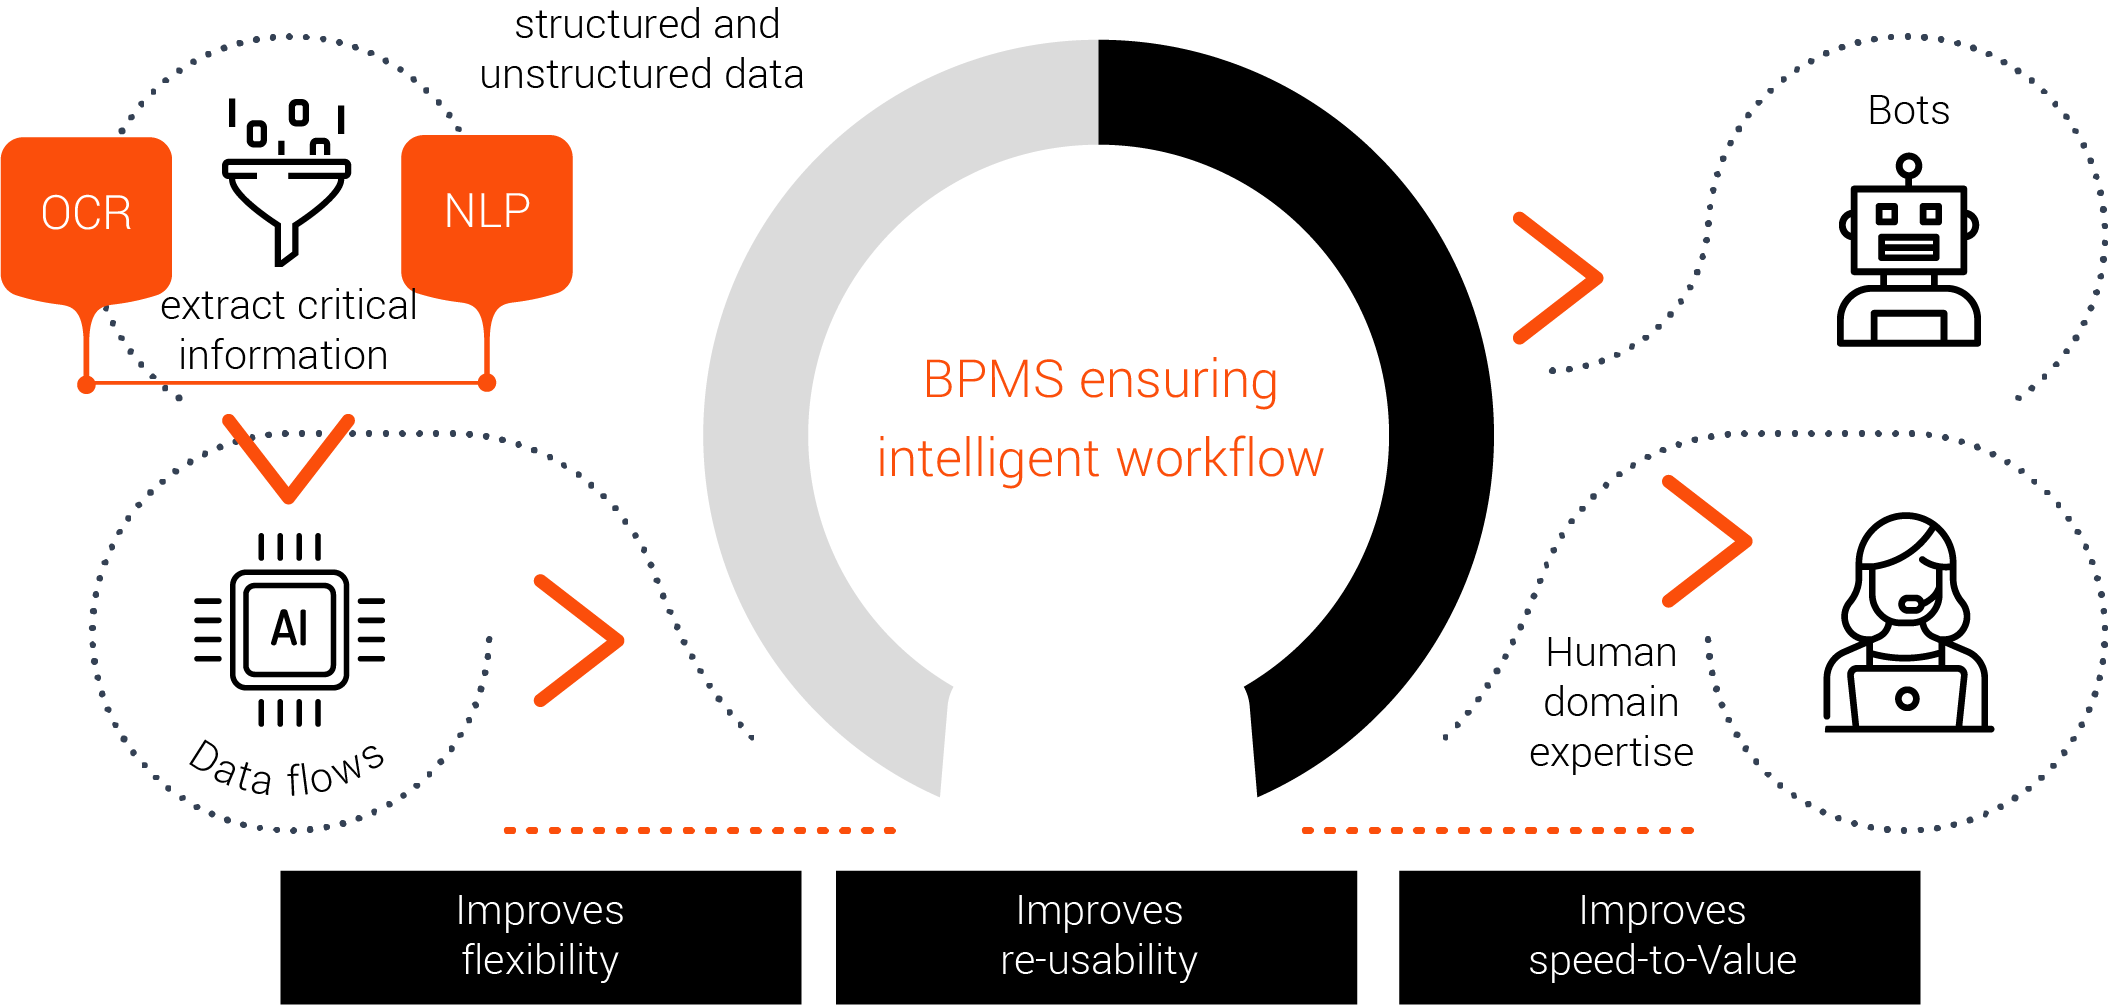 BPMS ensuring intelligent workflow 